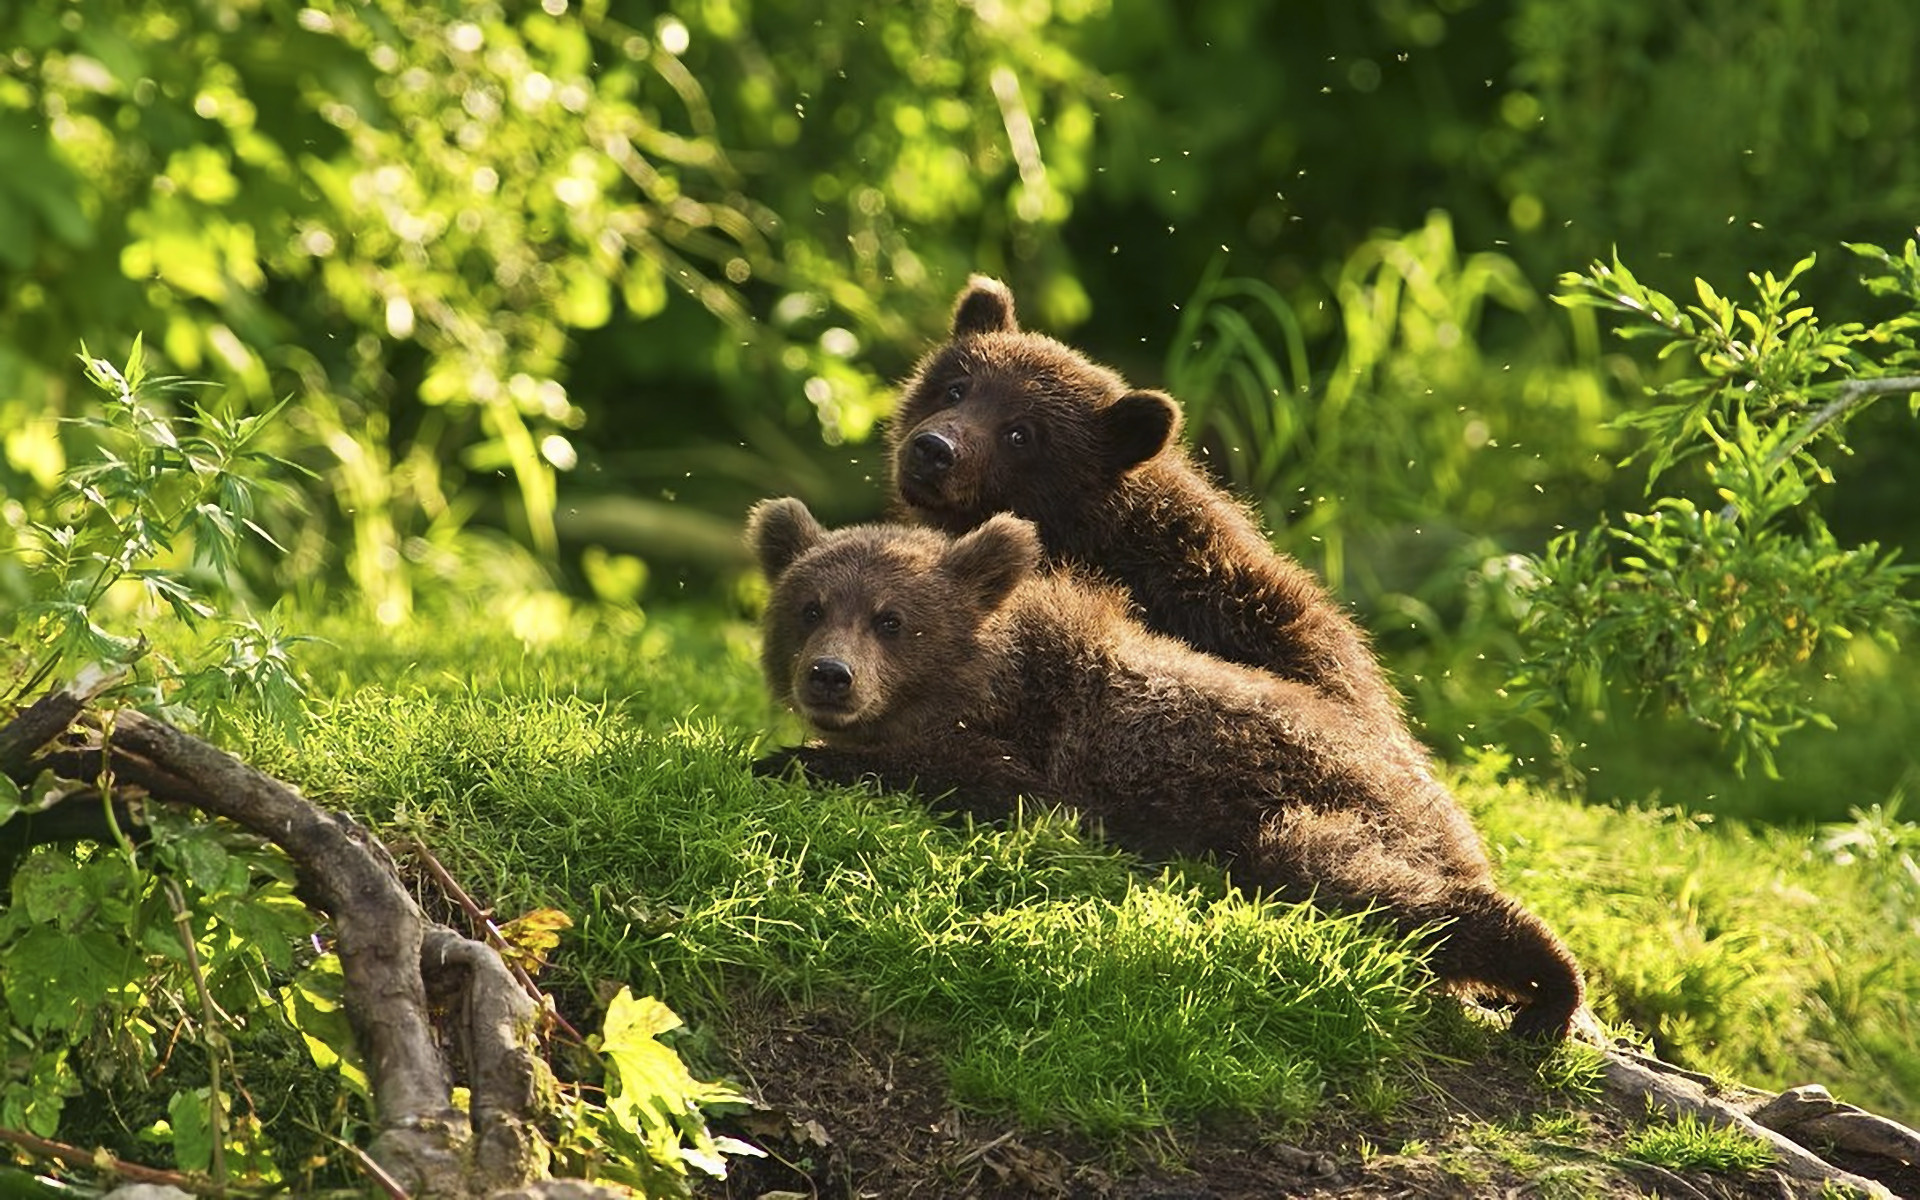 174019 descargar imagen oso, animales, osos: fondos de pantalla y protectores de pantalla gratis